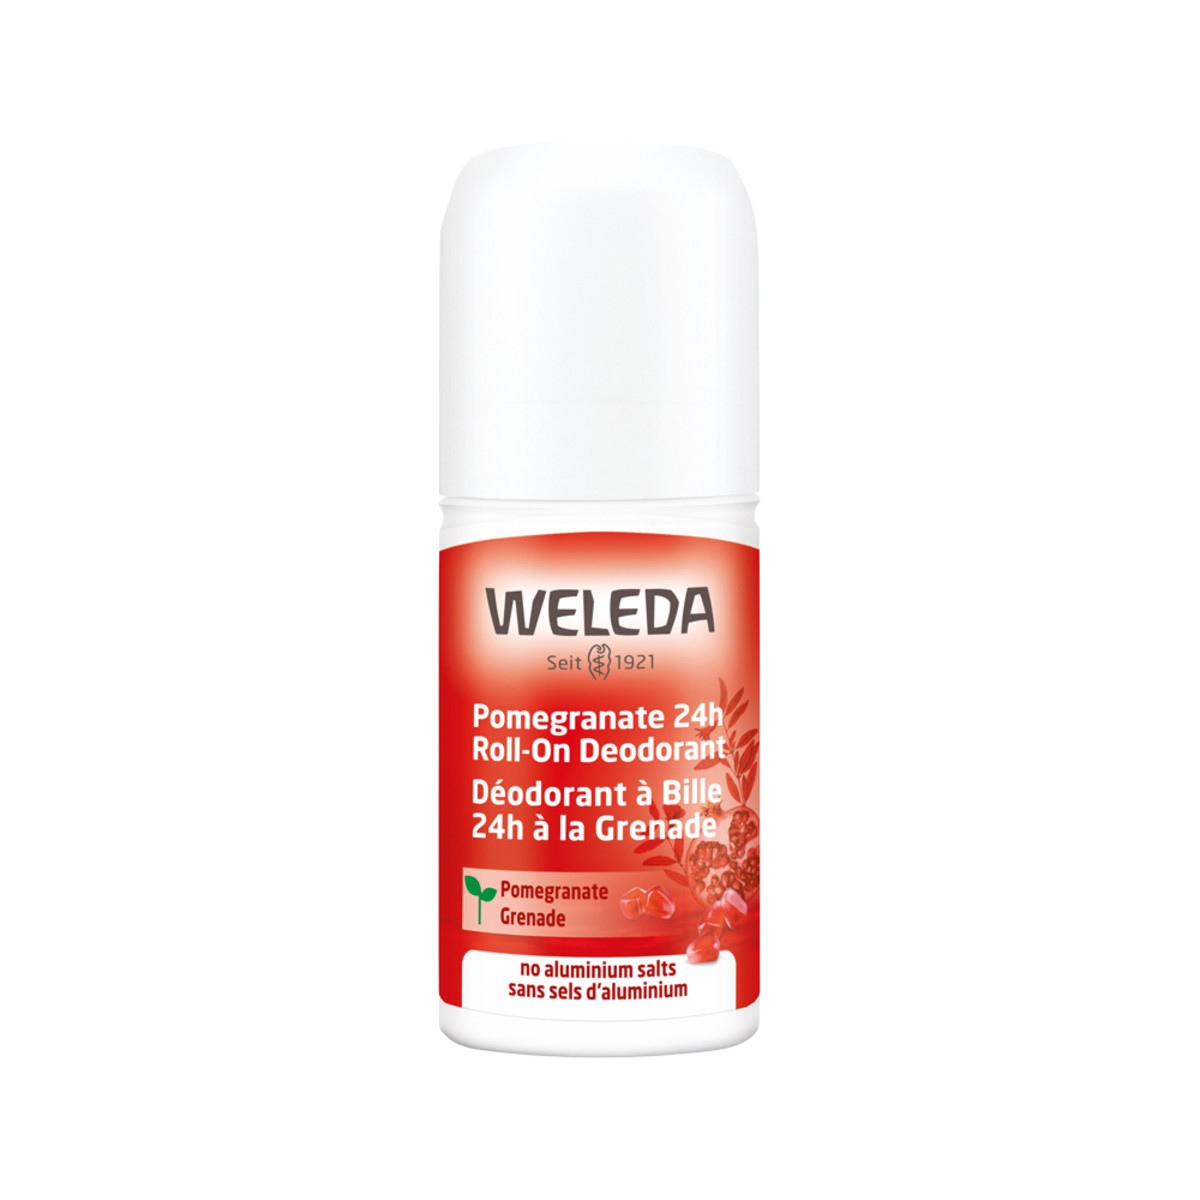 WELEDA - 24hr Roll-On Deodorant Pomegranate